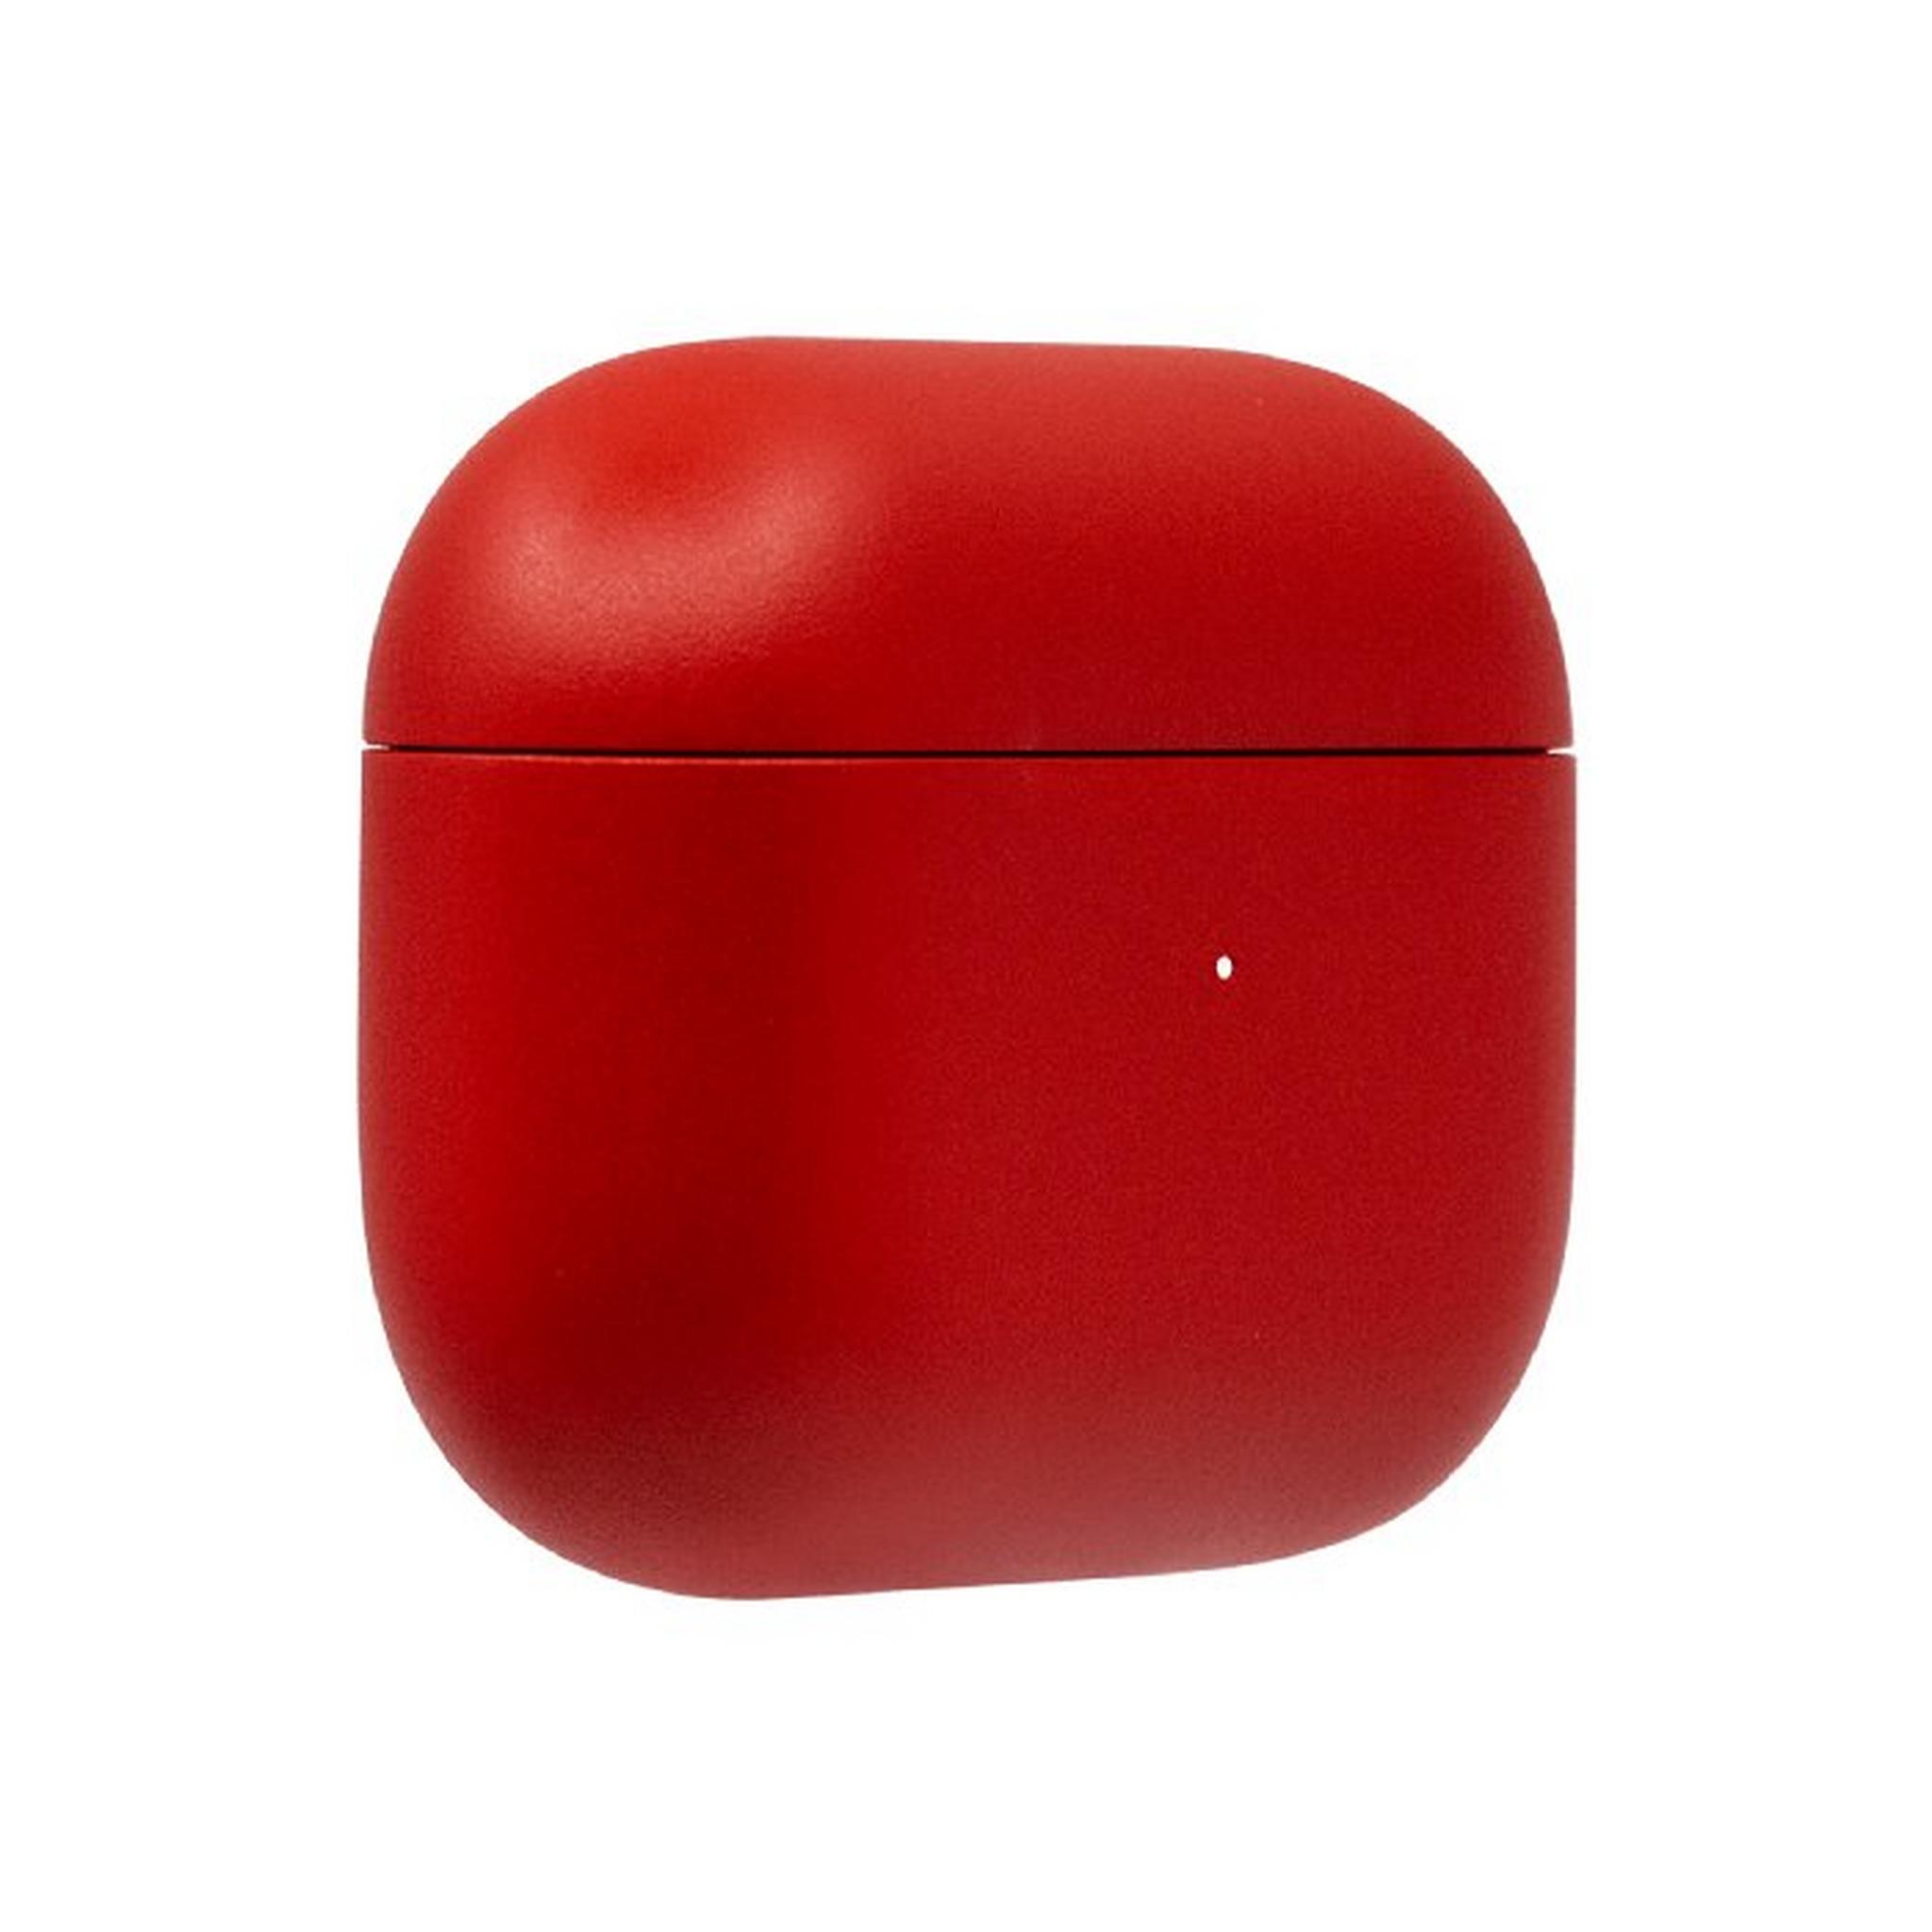 SWITCH Apple AirPods Pro Gen 2 Exclusive Ferrari Red, ROG2UCEXCPNTFRRDGB – Red Matte